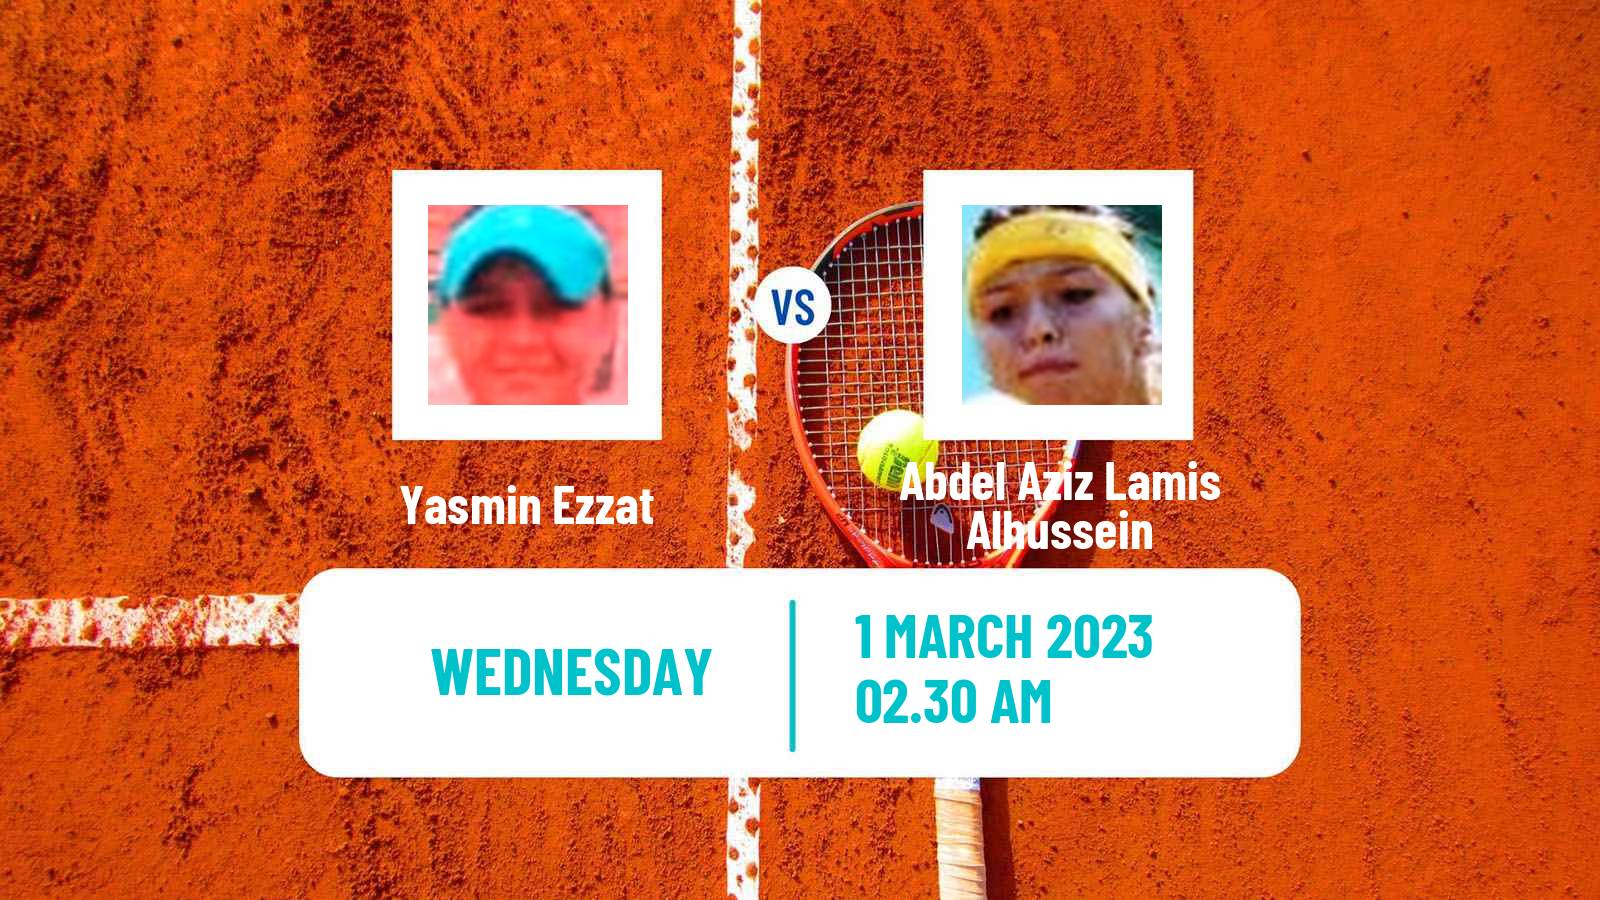 Tennis ITF Tournaments Yasmin Ezzat - Abdel Aziz Lamis Alhussein